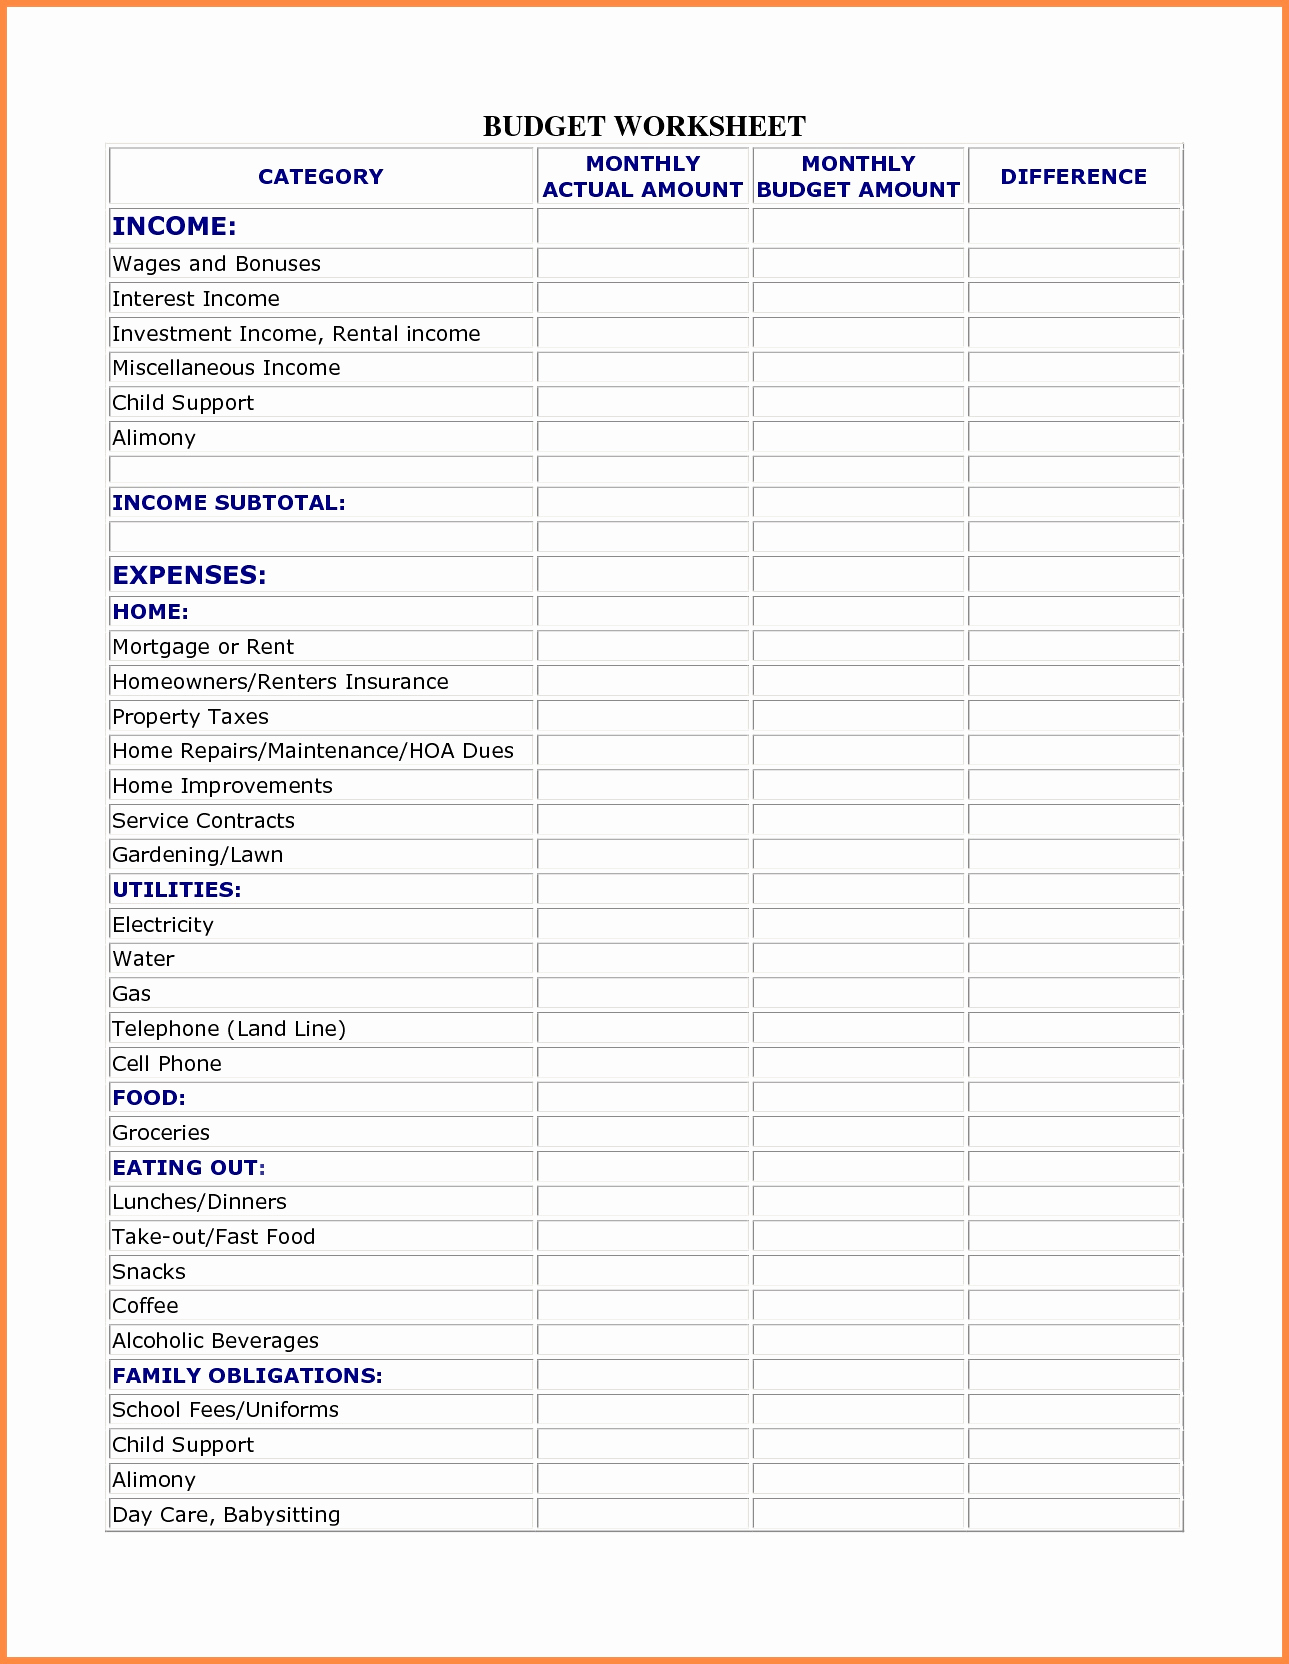 Restaurant Budget Spreadsheet Free Download For Sheet Restaurant Budget Spreadsheet Excel Forry Inspirational Of